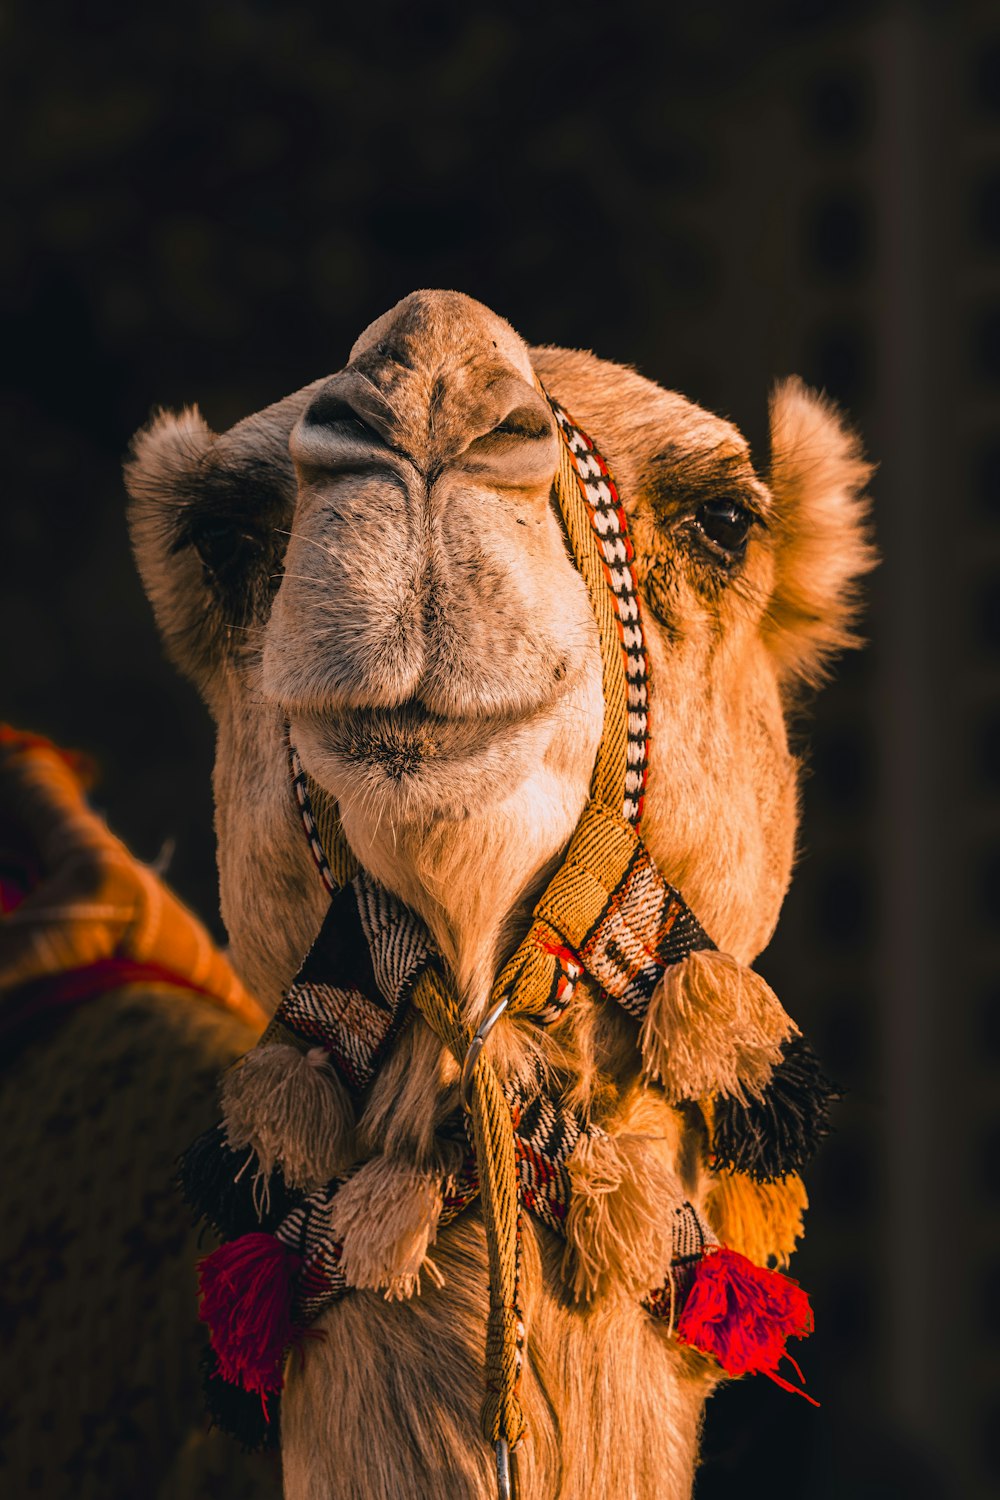 a close up of a camel wearing a headdress